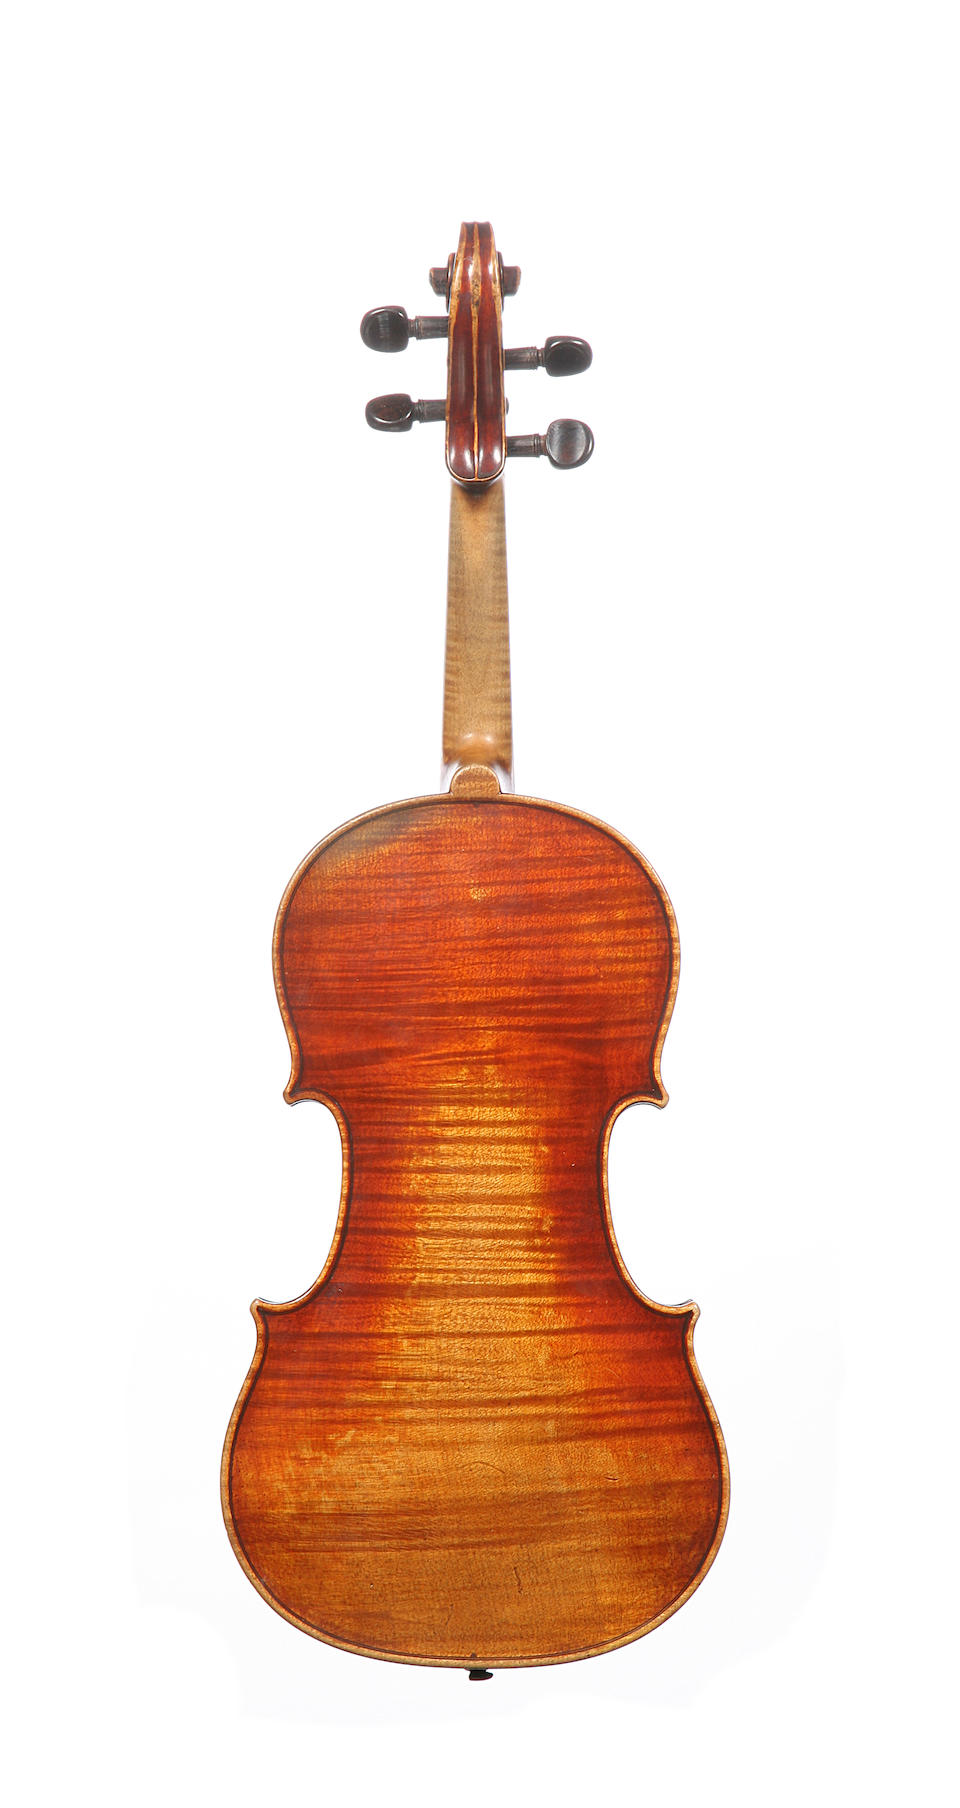 A French Violin by Auguste Sebastien Phillipe Bernardel, Paris 1846 (2)